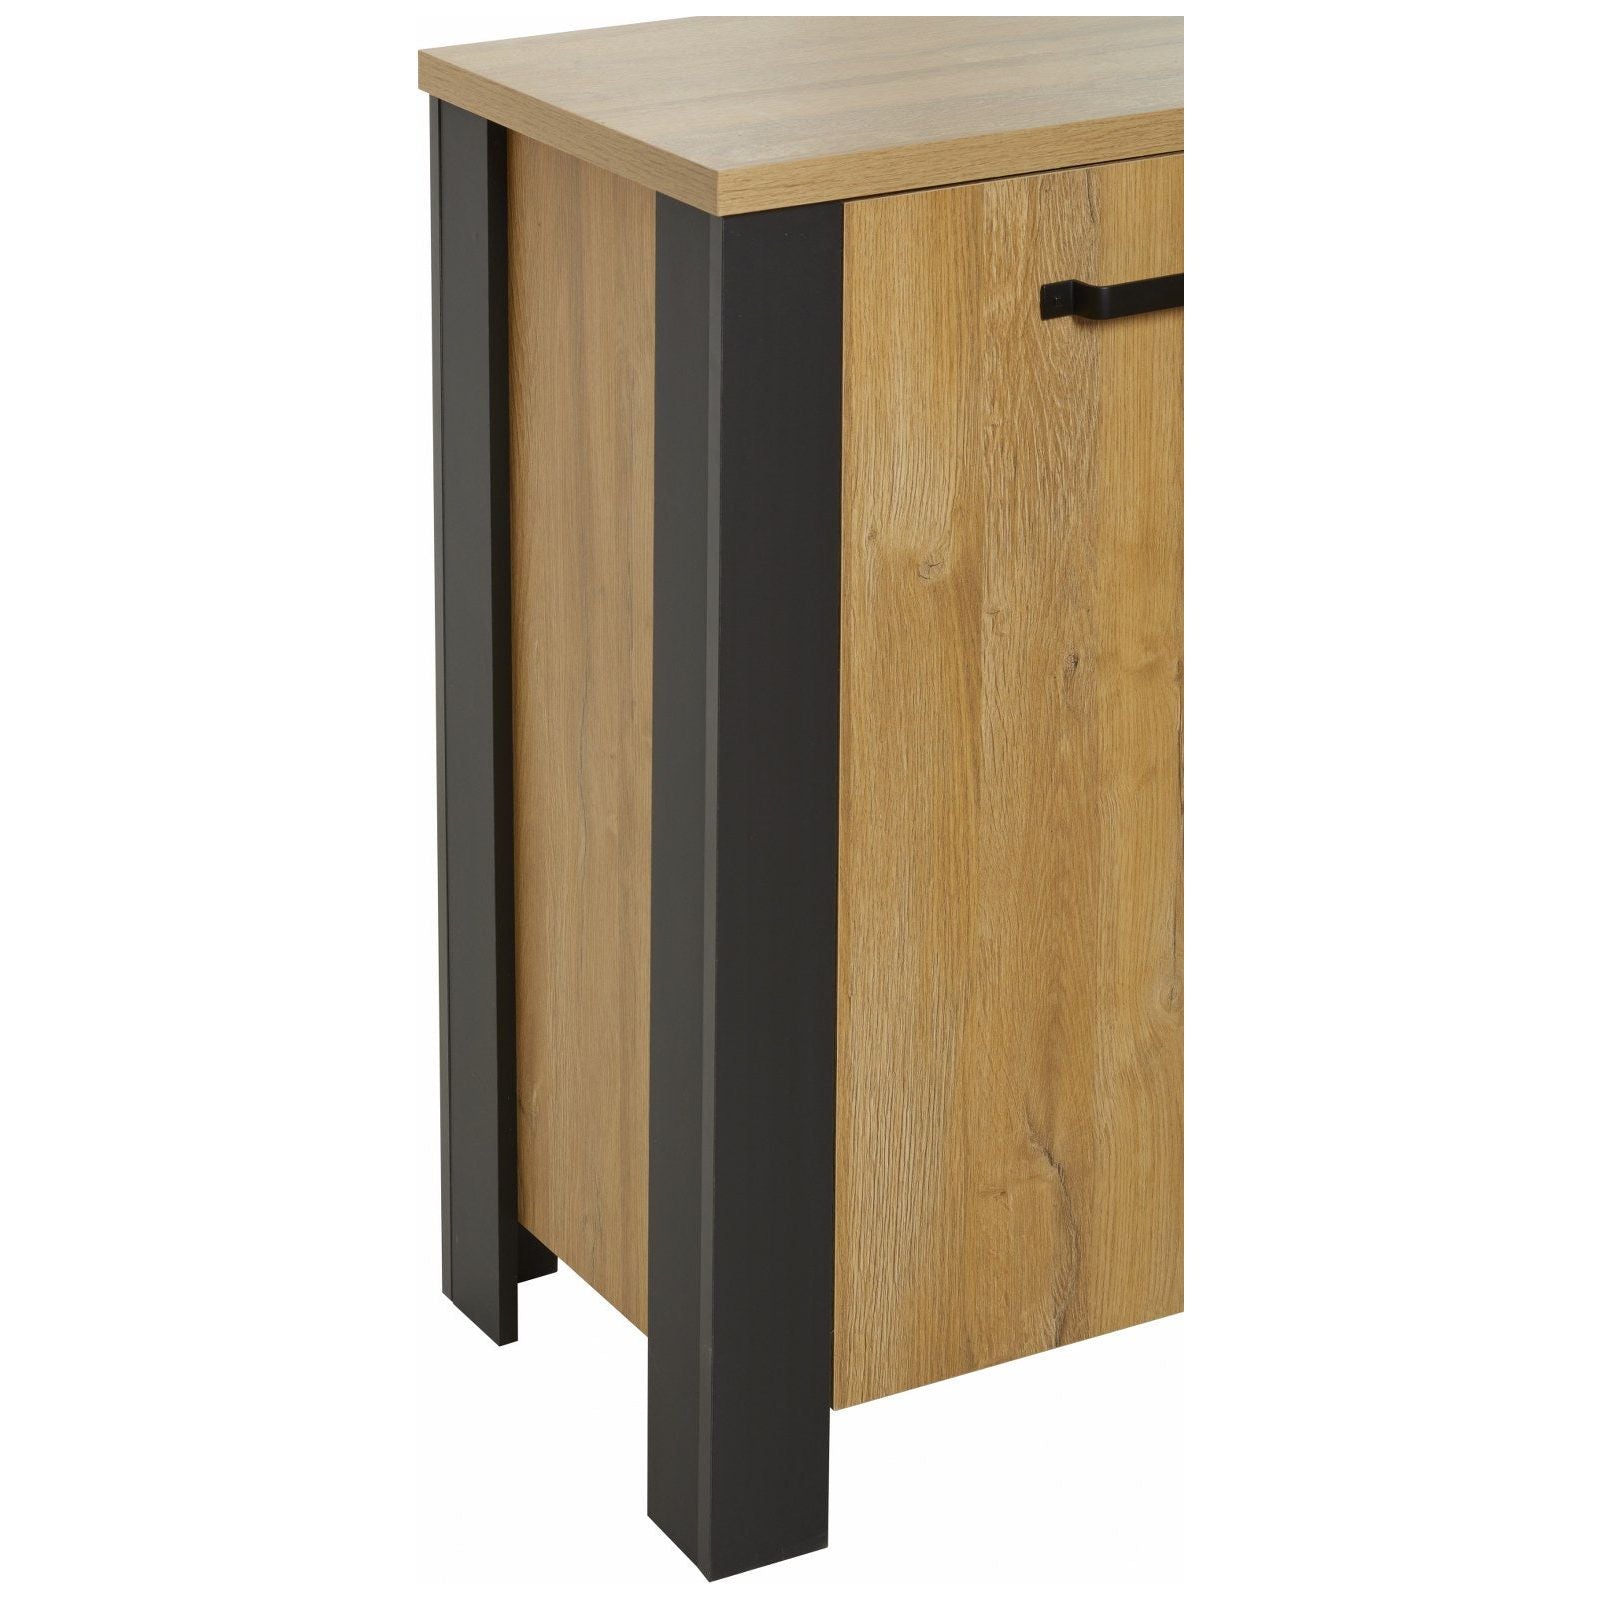 Dresser | Furniture series Highlight | brown, natural, black |